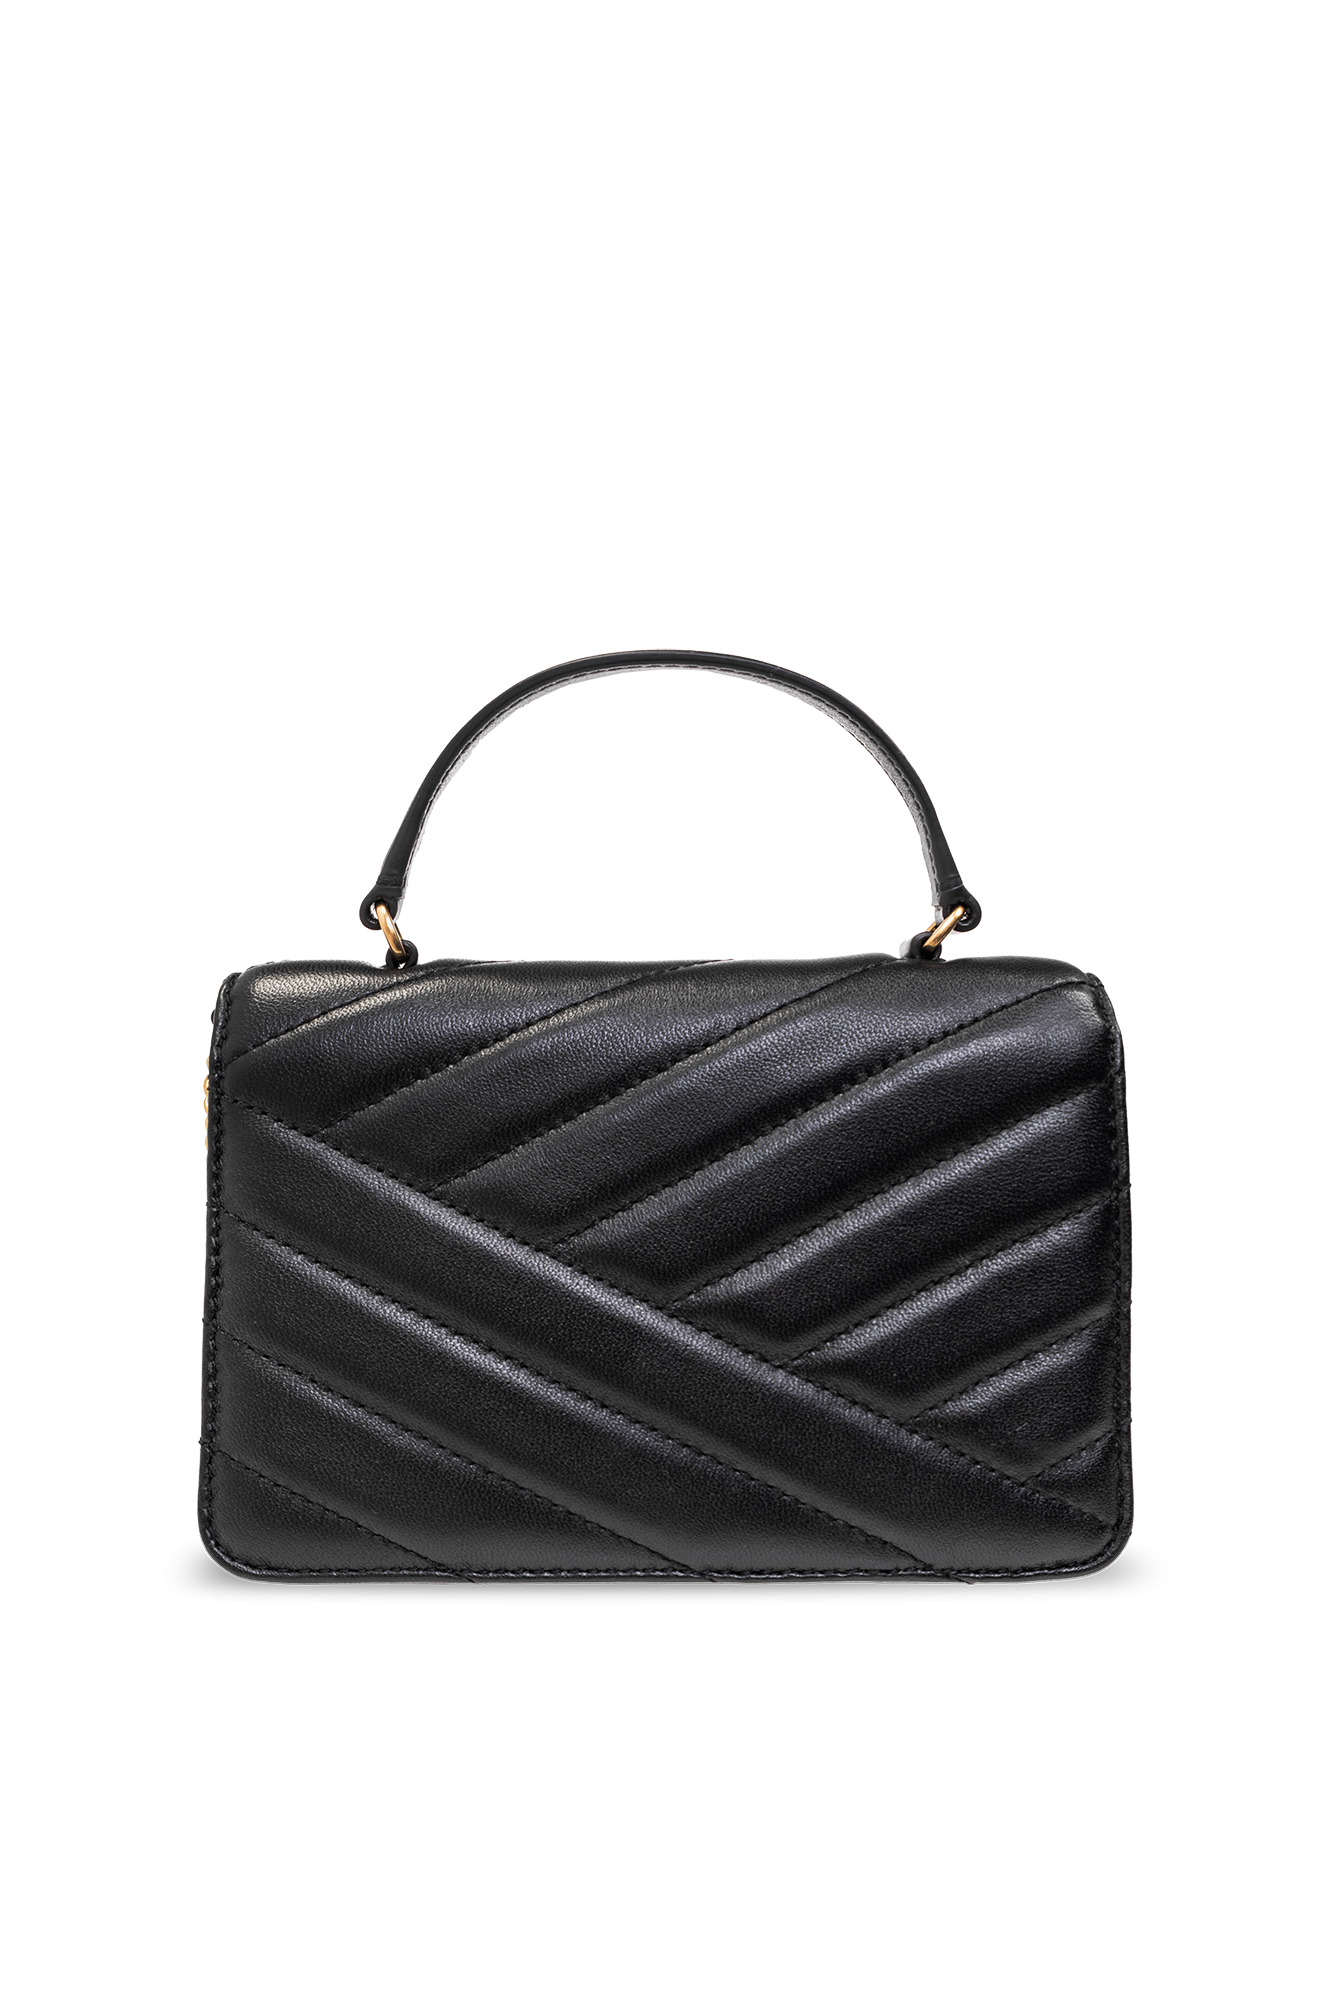 Tory Burch Mini Kira Chevron Quilted Leather Top Handle Bag in Metallic